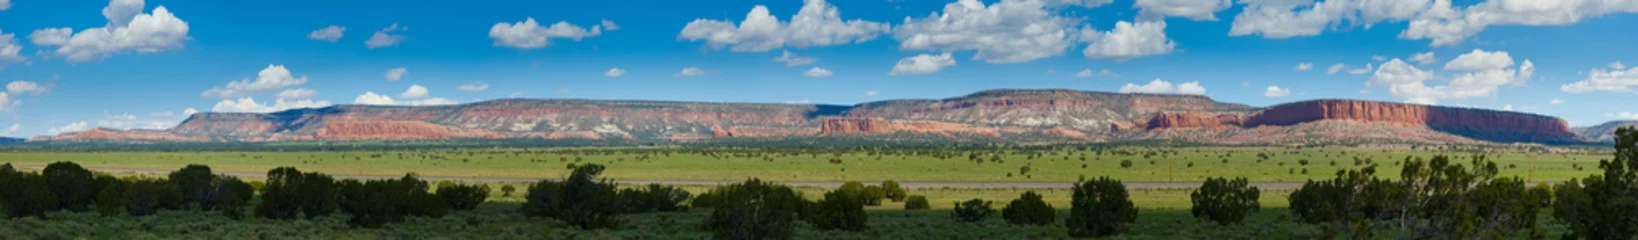 Fotobehang Route 66 Rode bergen van Arizona - panorama